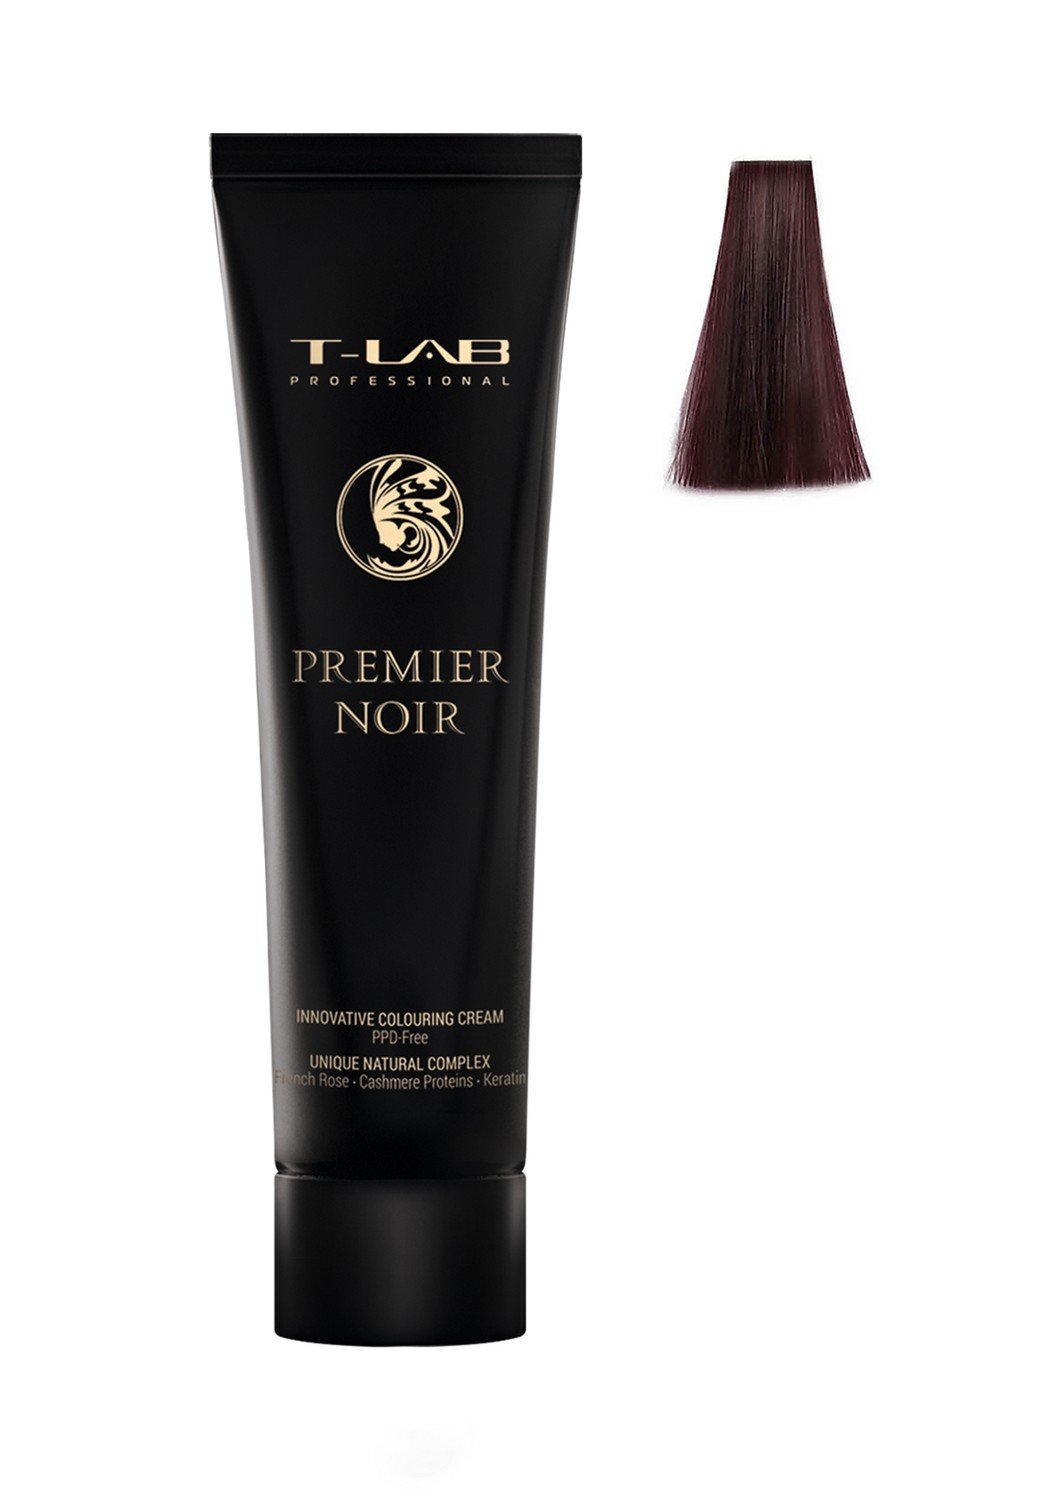 Крем-краска T-LAB Professional Premier Noir colouring cream, оттенок 5.4 (light copper brown) - фото 2